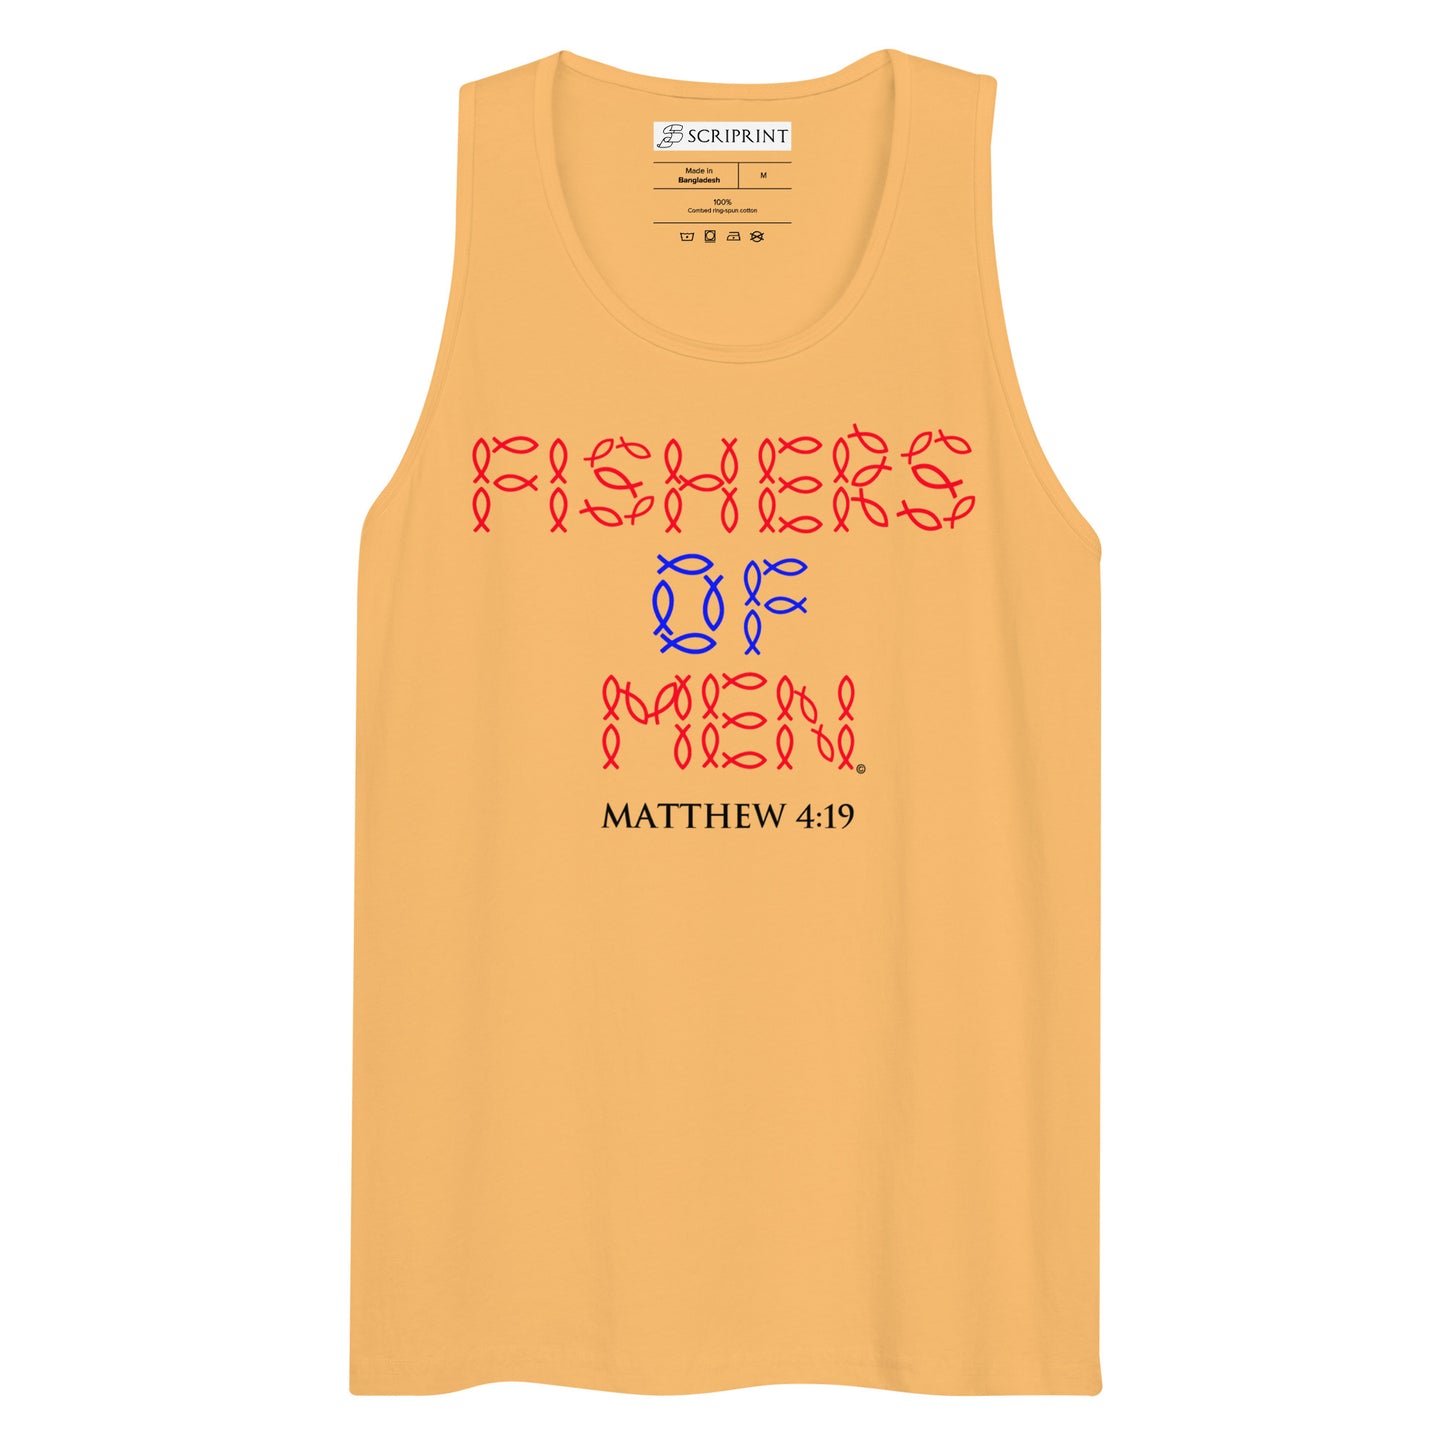 Fishers of Men Men’s Premium Tank Top